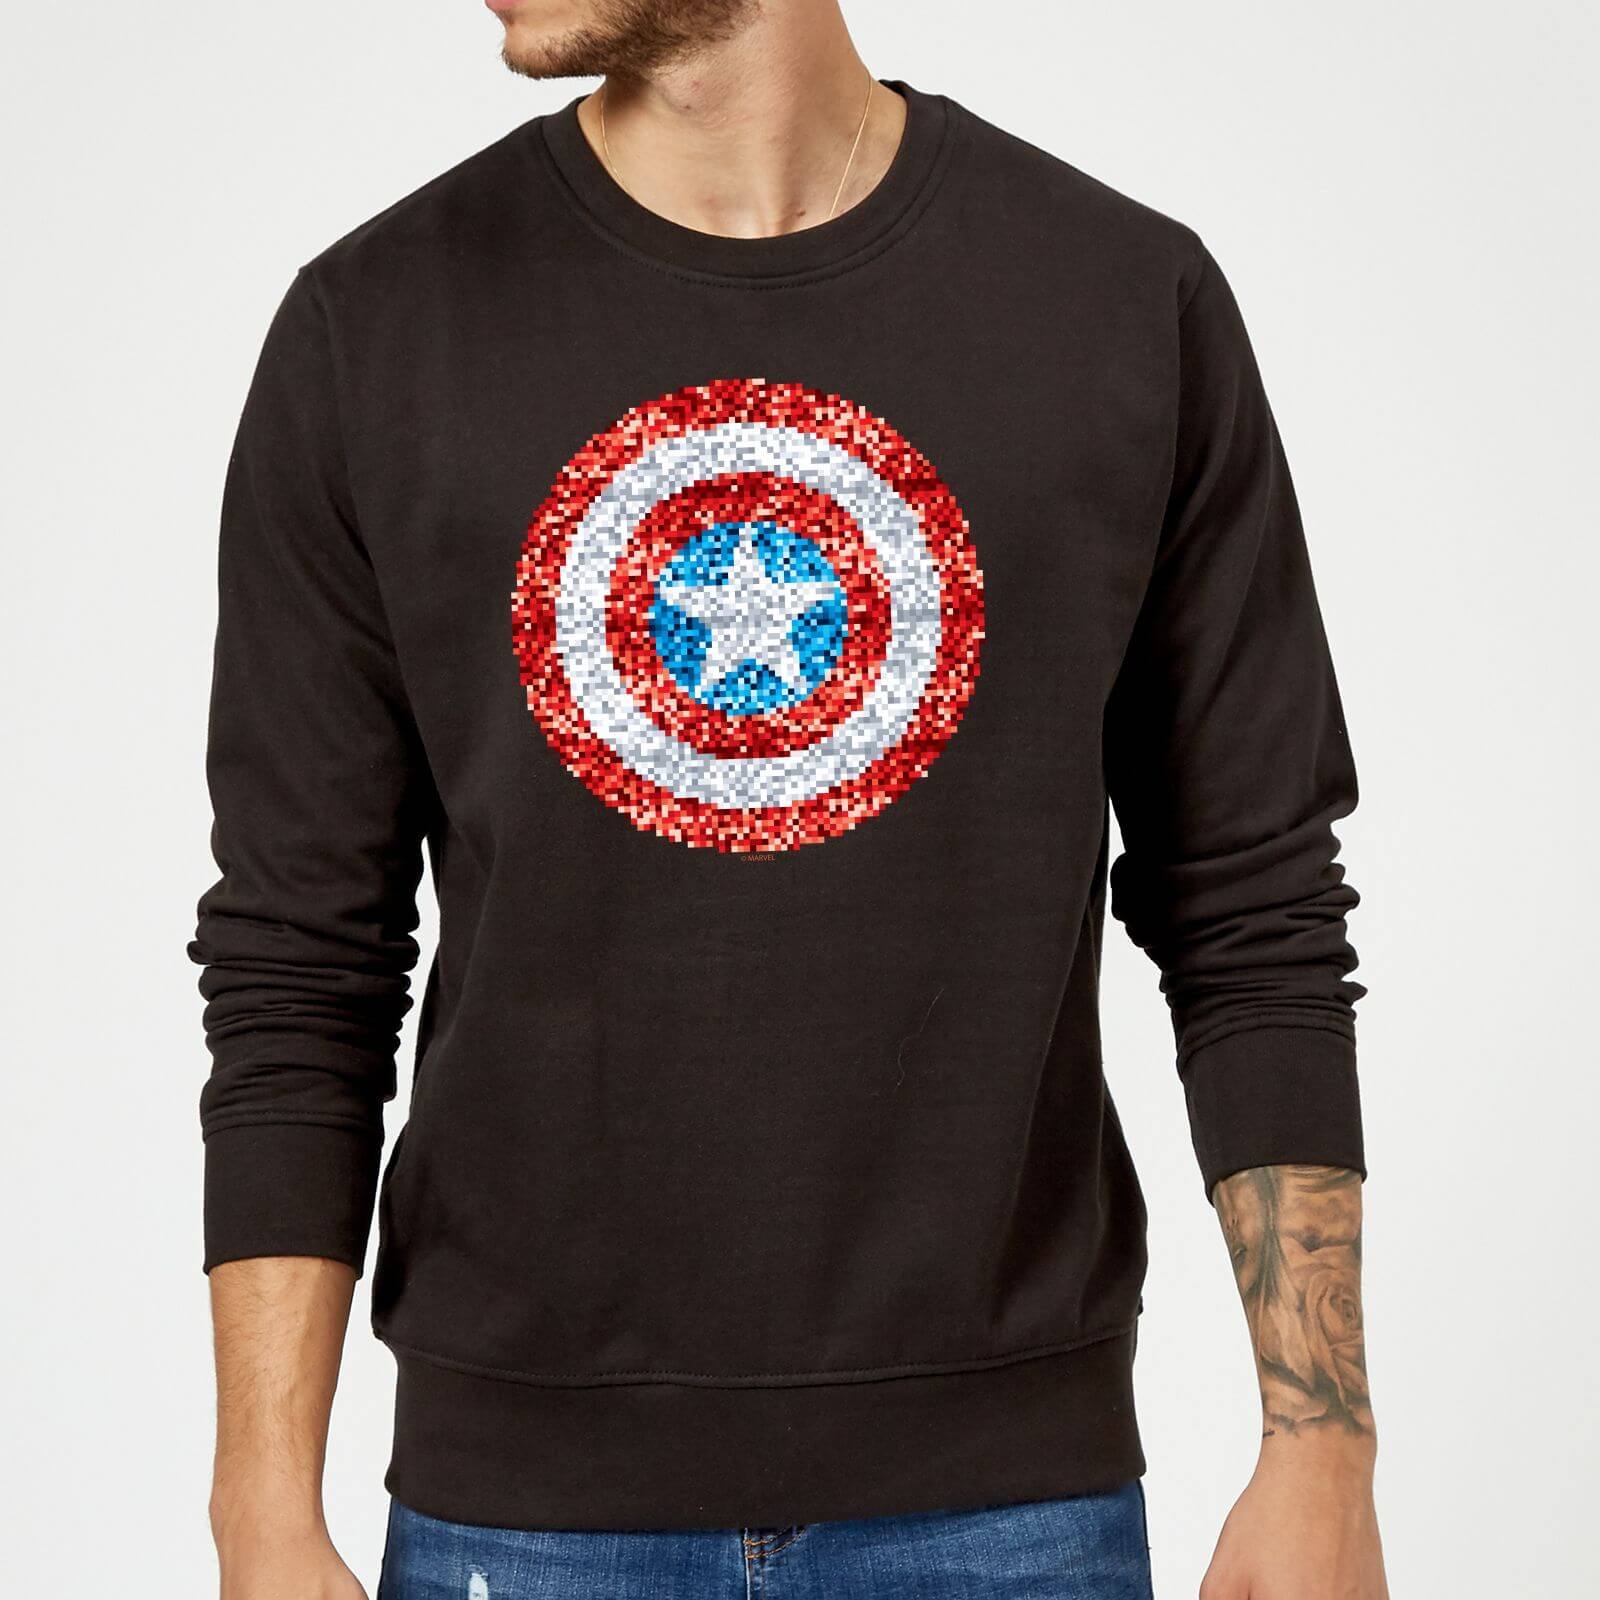 Marvel Captain America Pixelated Shield Sweatshirt - Black - S